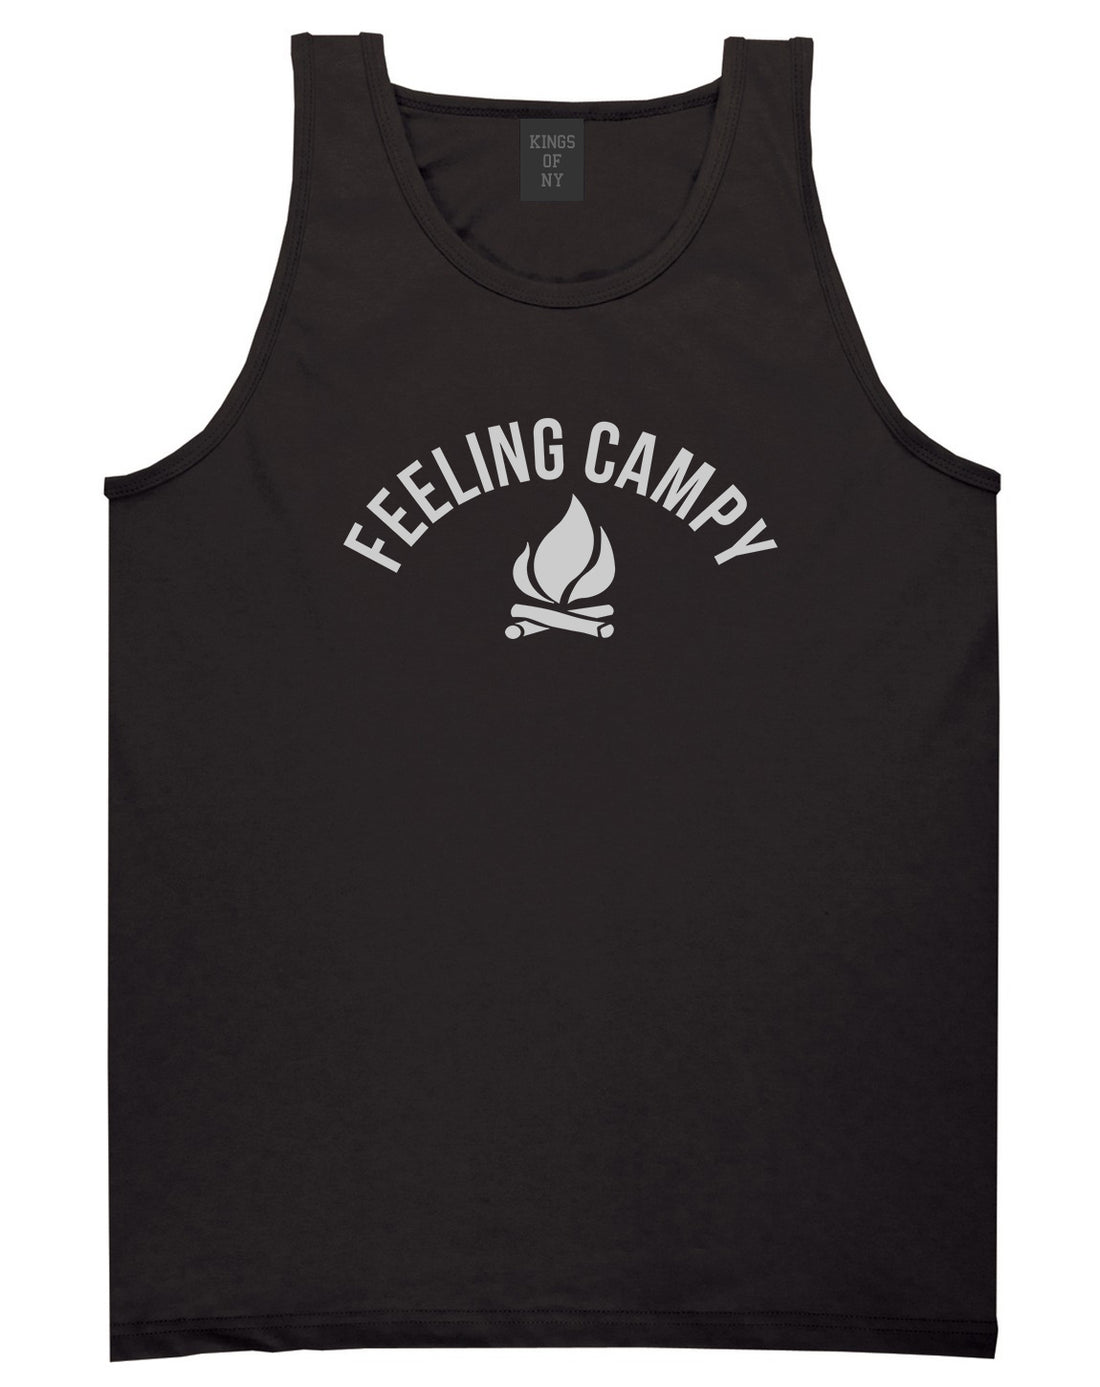 Feeling Campy Camp Fire Outdoor Mens Tank Top Shirt Black